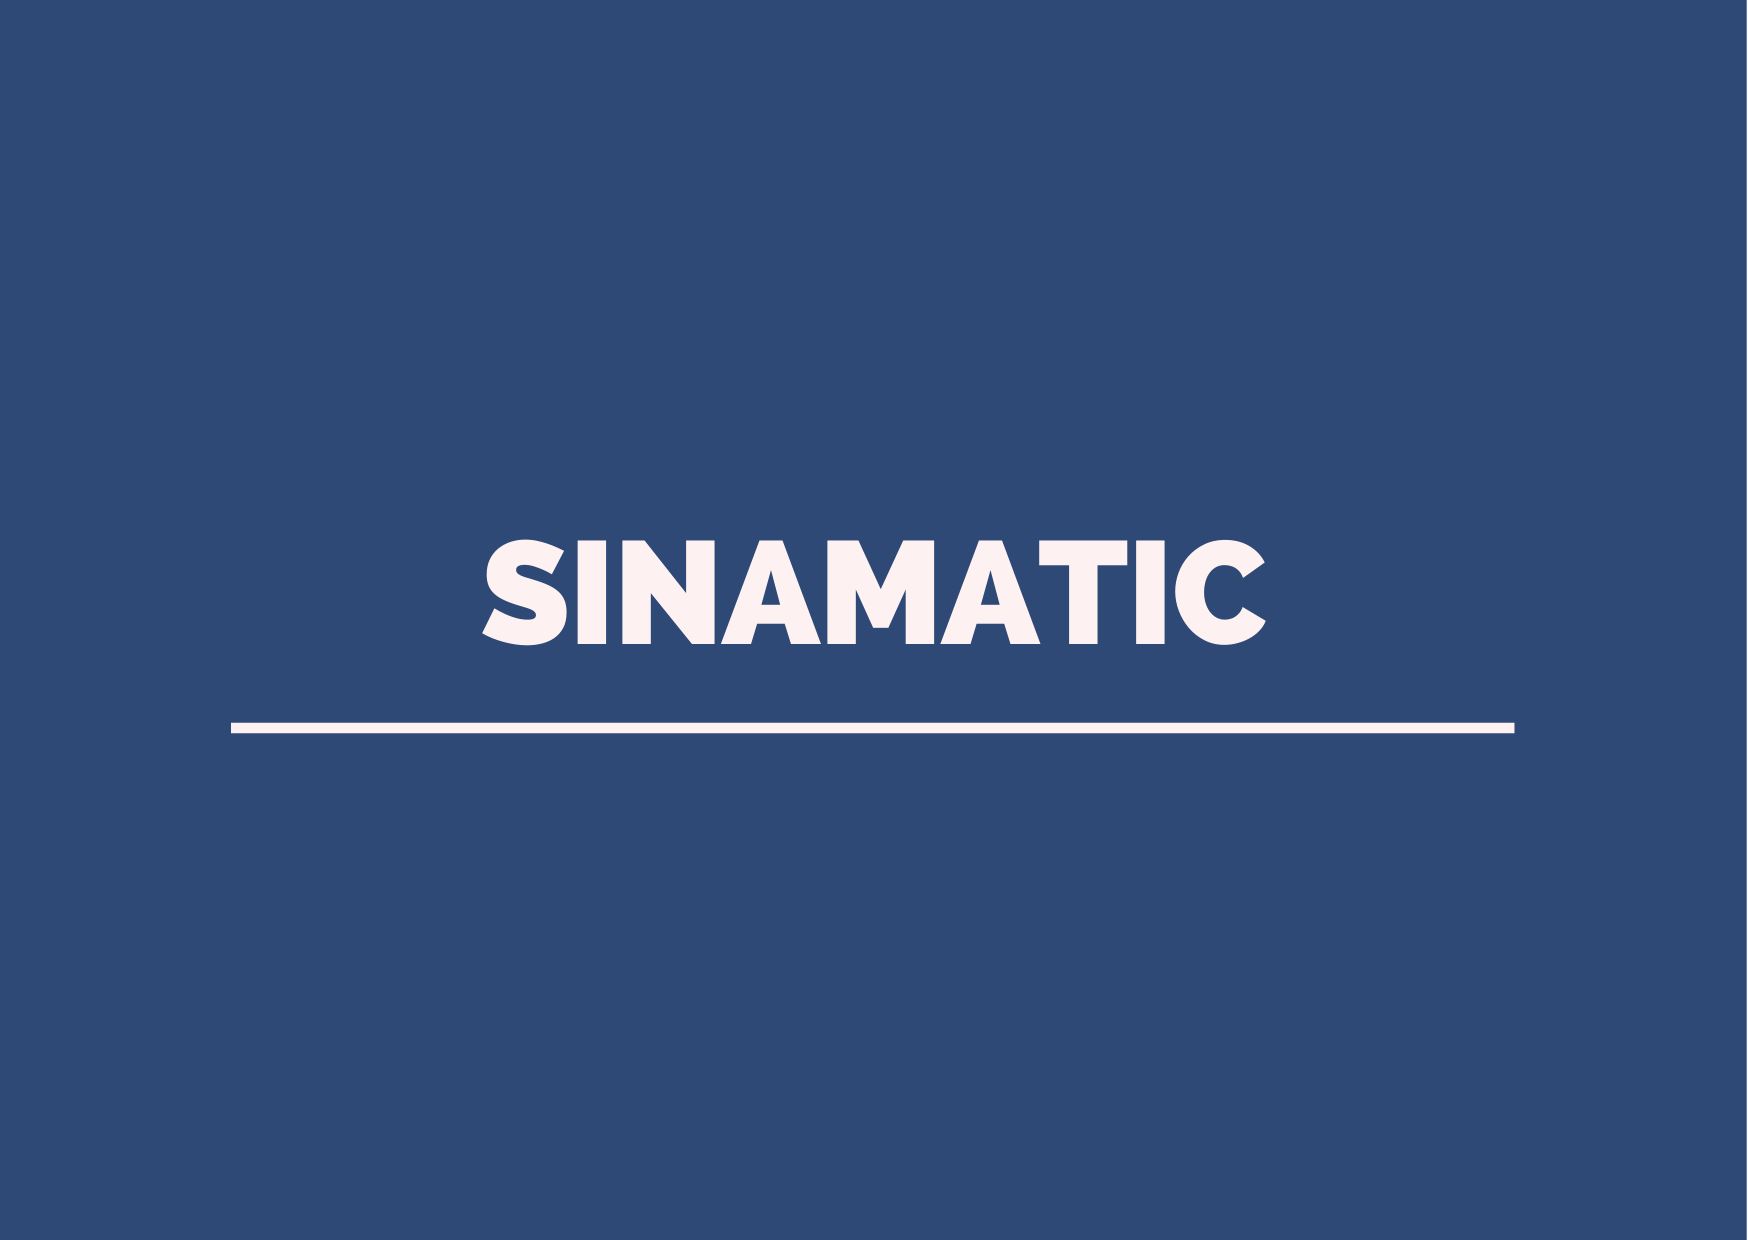 sinamatic text